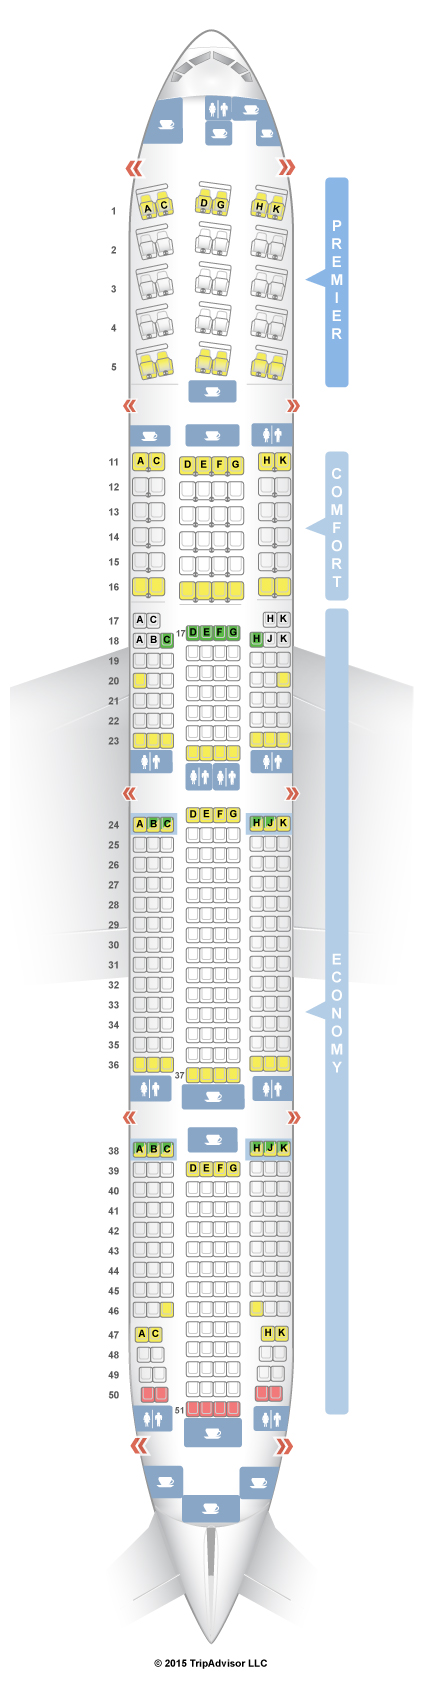 38+ Seat layout of boeing 777 300er